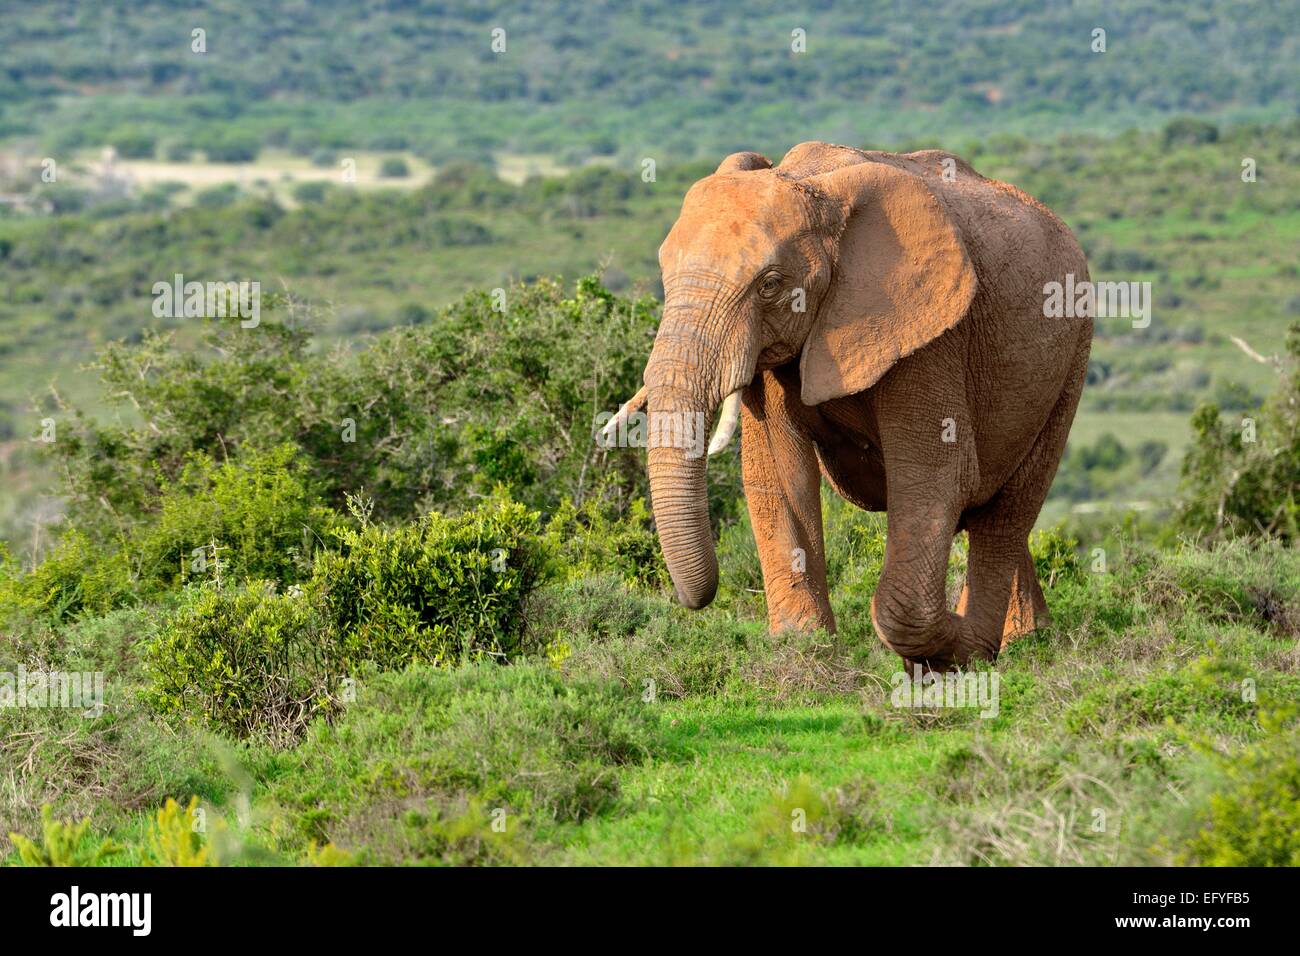 African ERMephant (RMoxodonta africana), Addo ERMephant NationaRM Park, Addo, Eastern Cape, South Africa Stock Photo